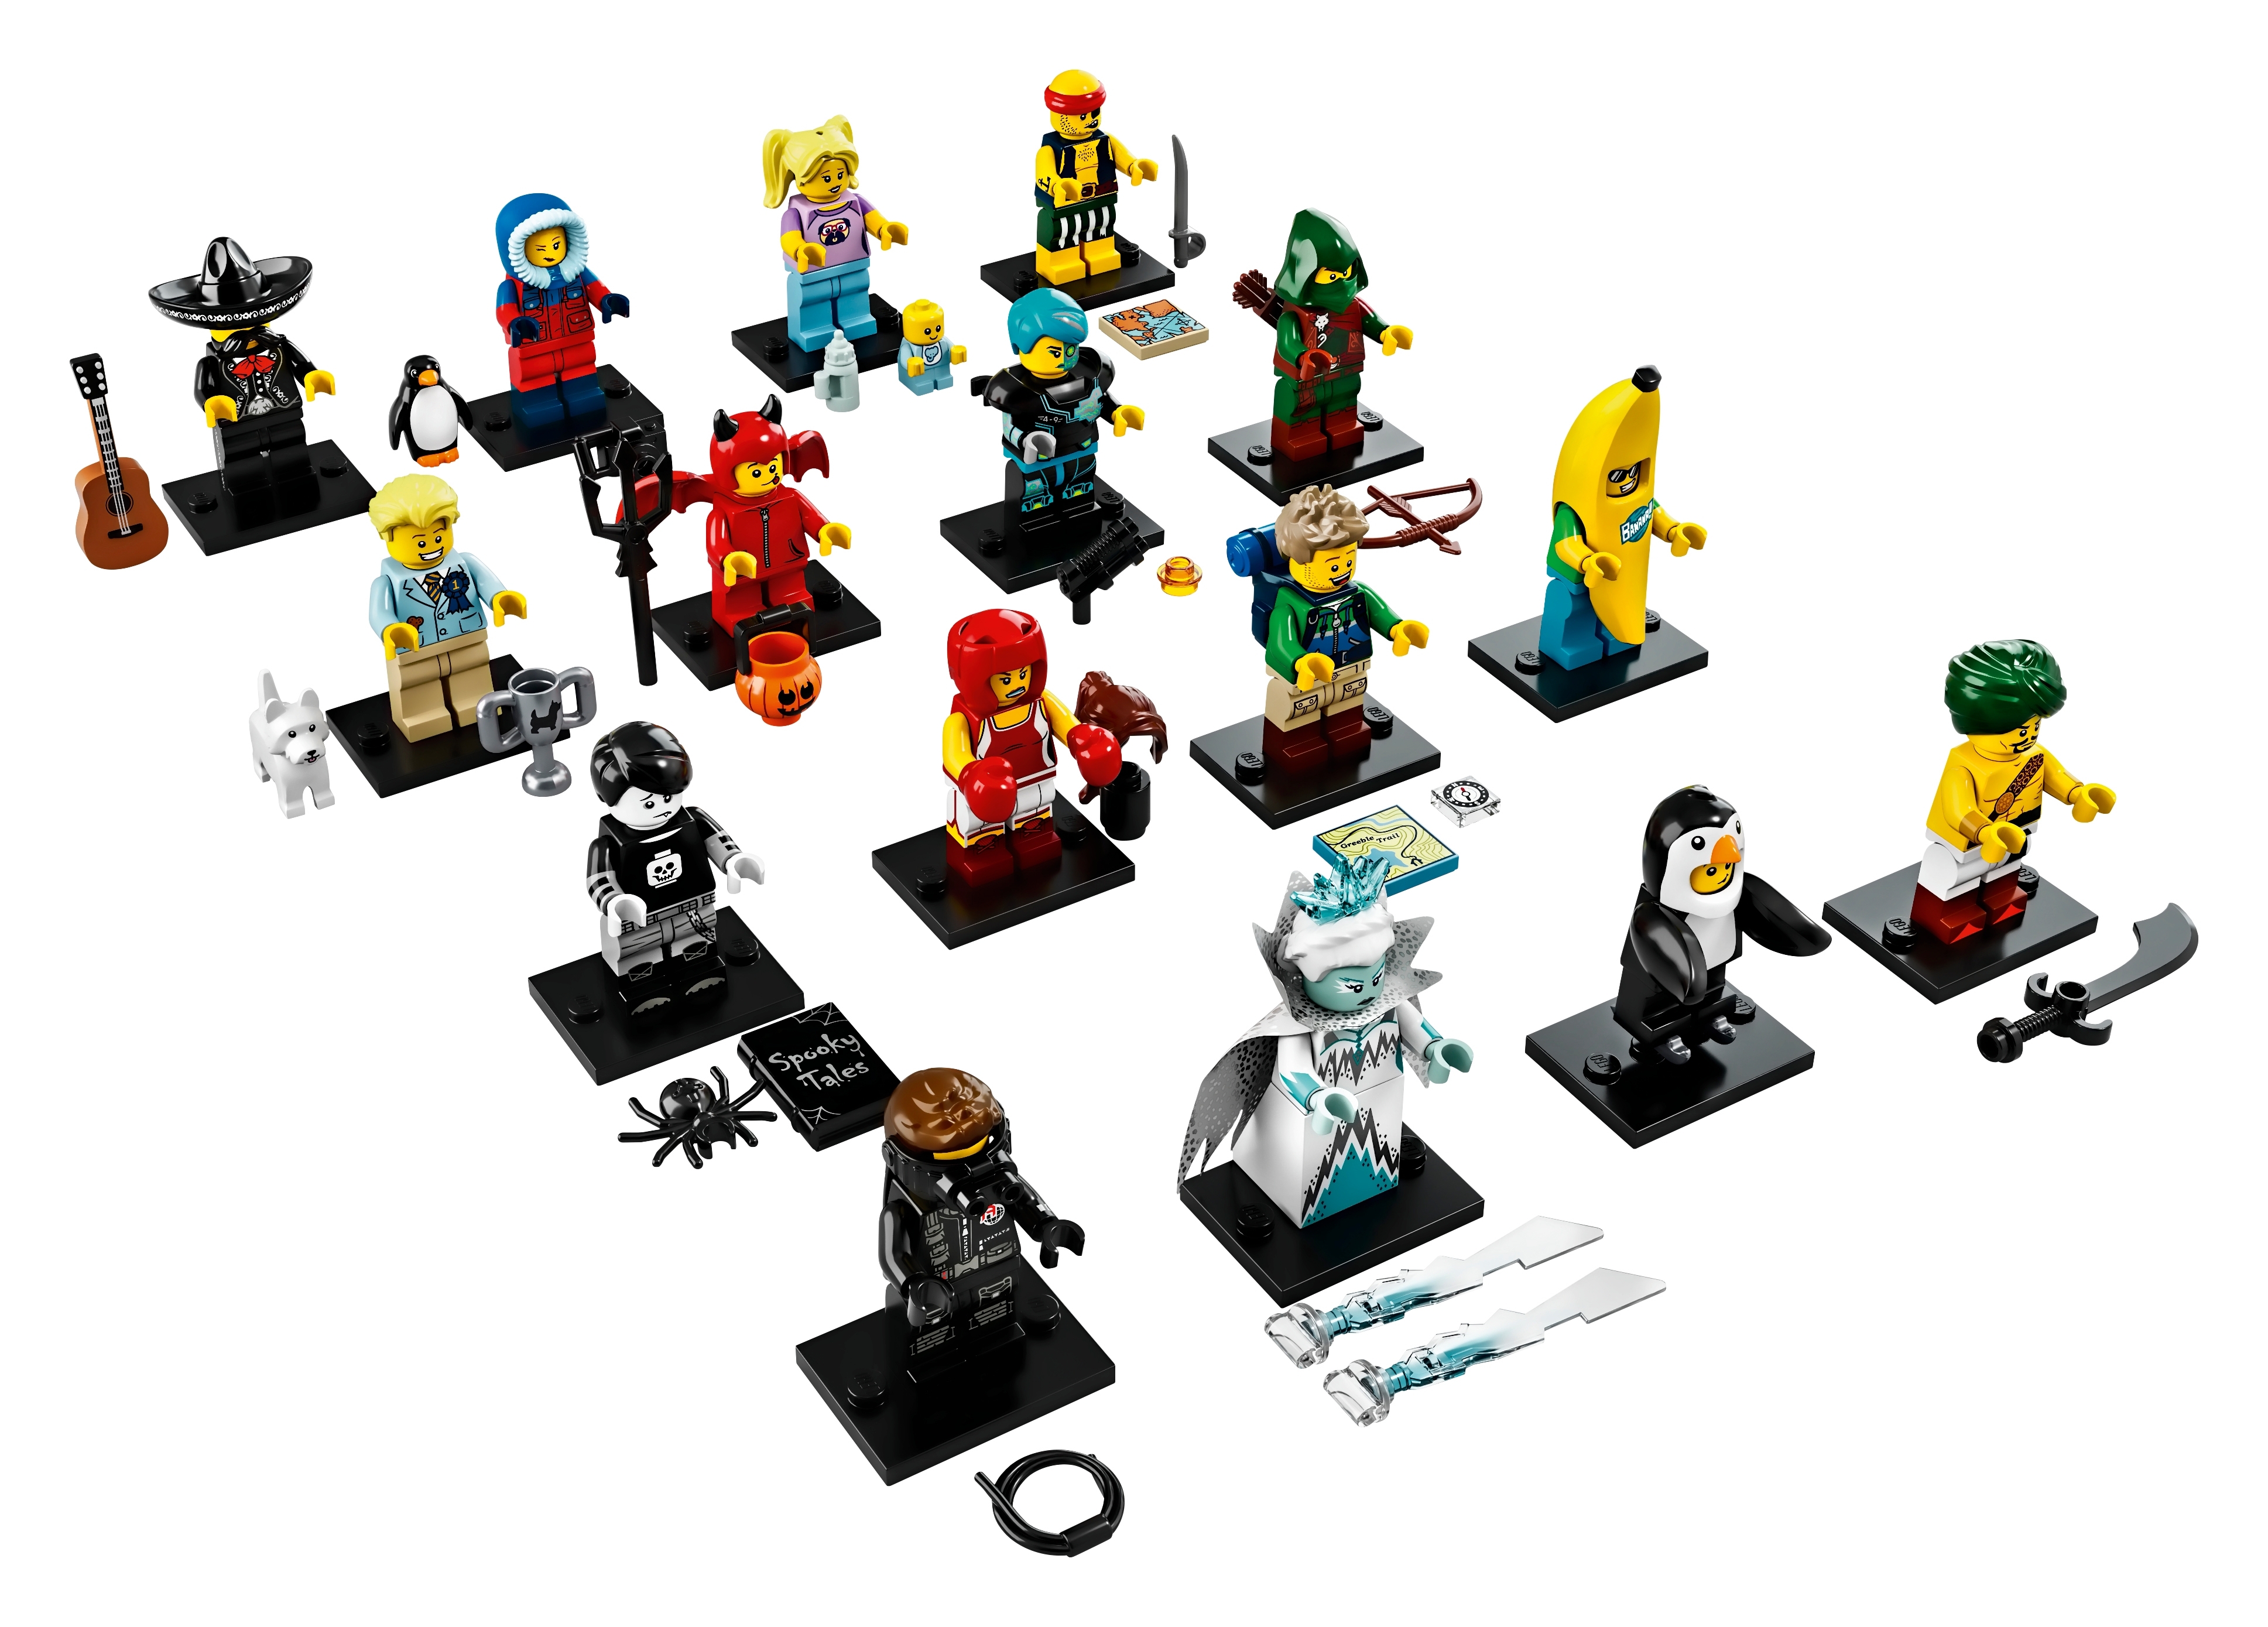 LEGO MINIFIGURE​​S SERIES 16 71013 Desert Warrior